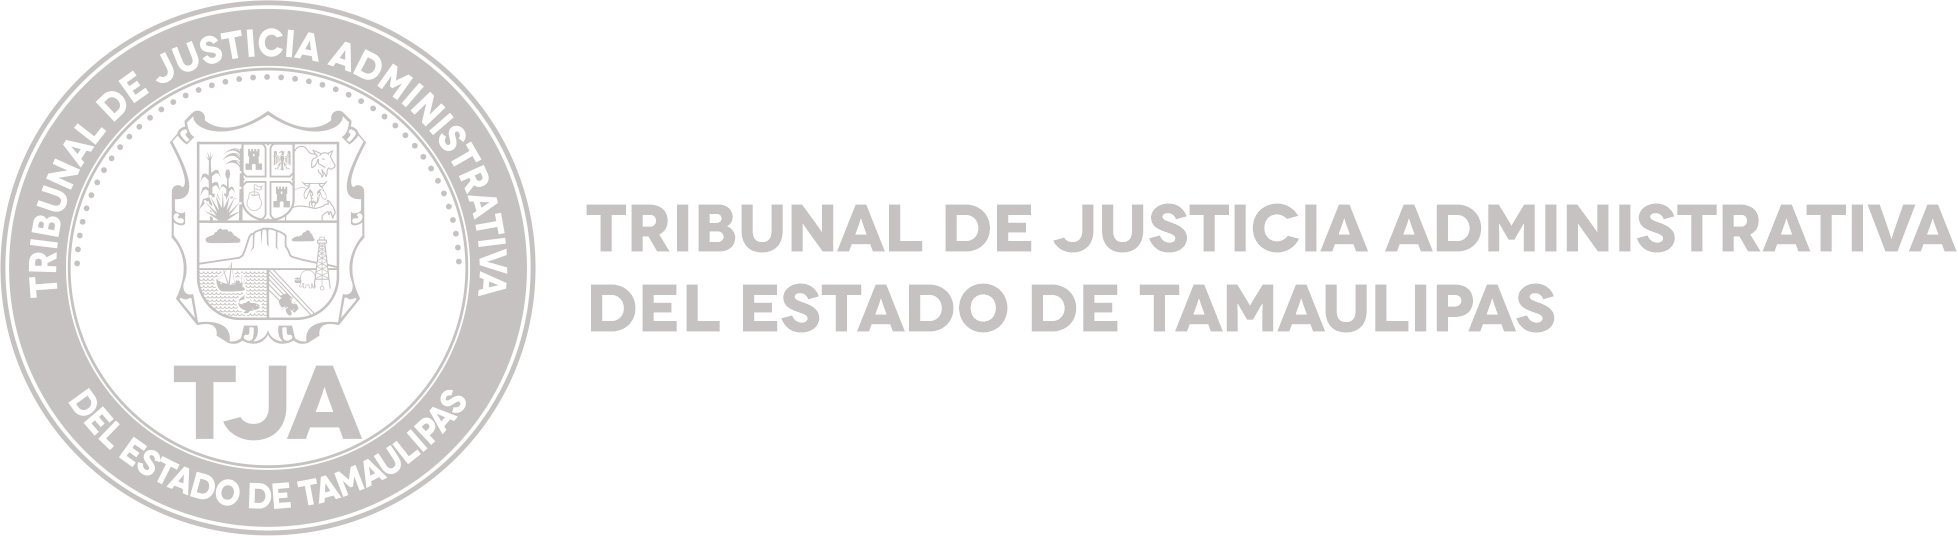 TRIBUNAL DE JUSTICIA ADMINISTRATIVA